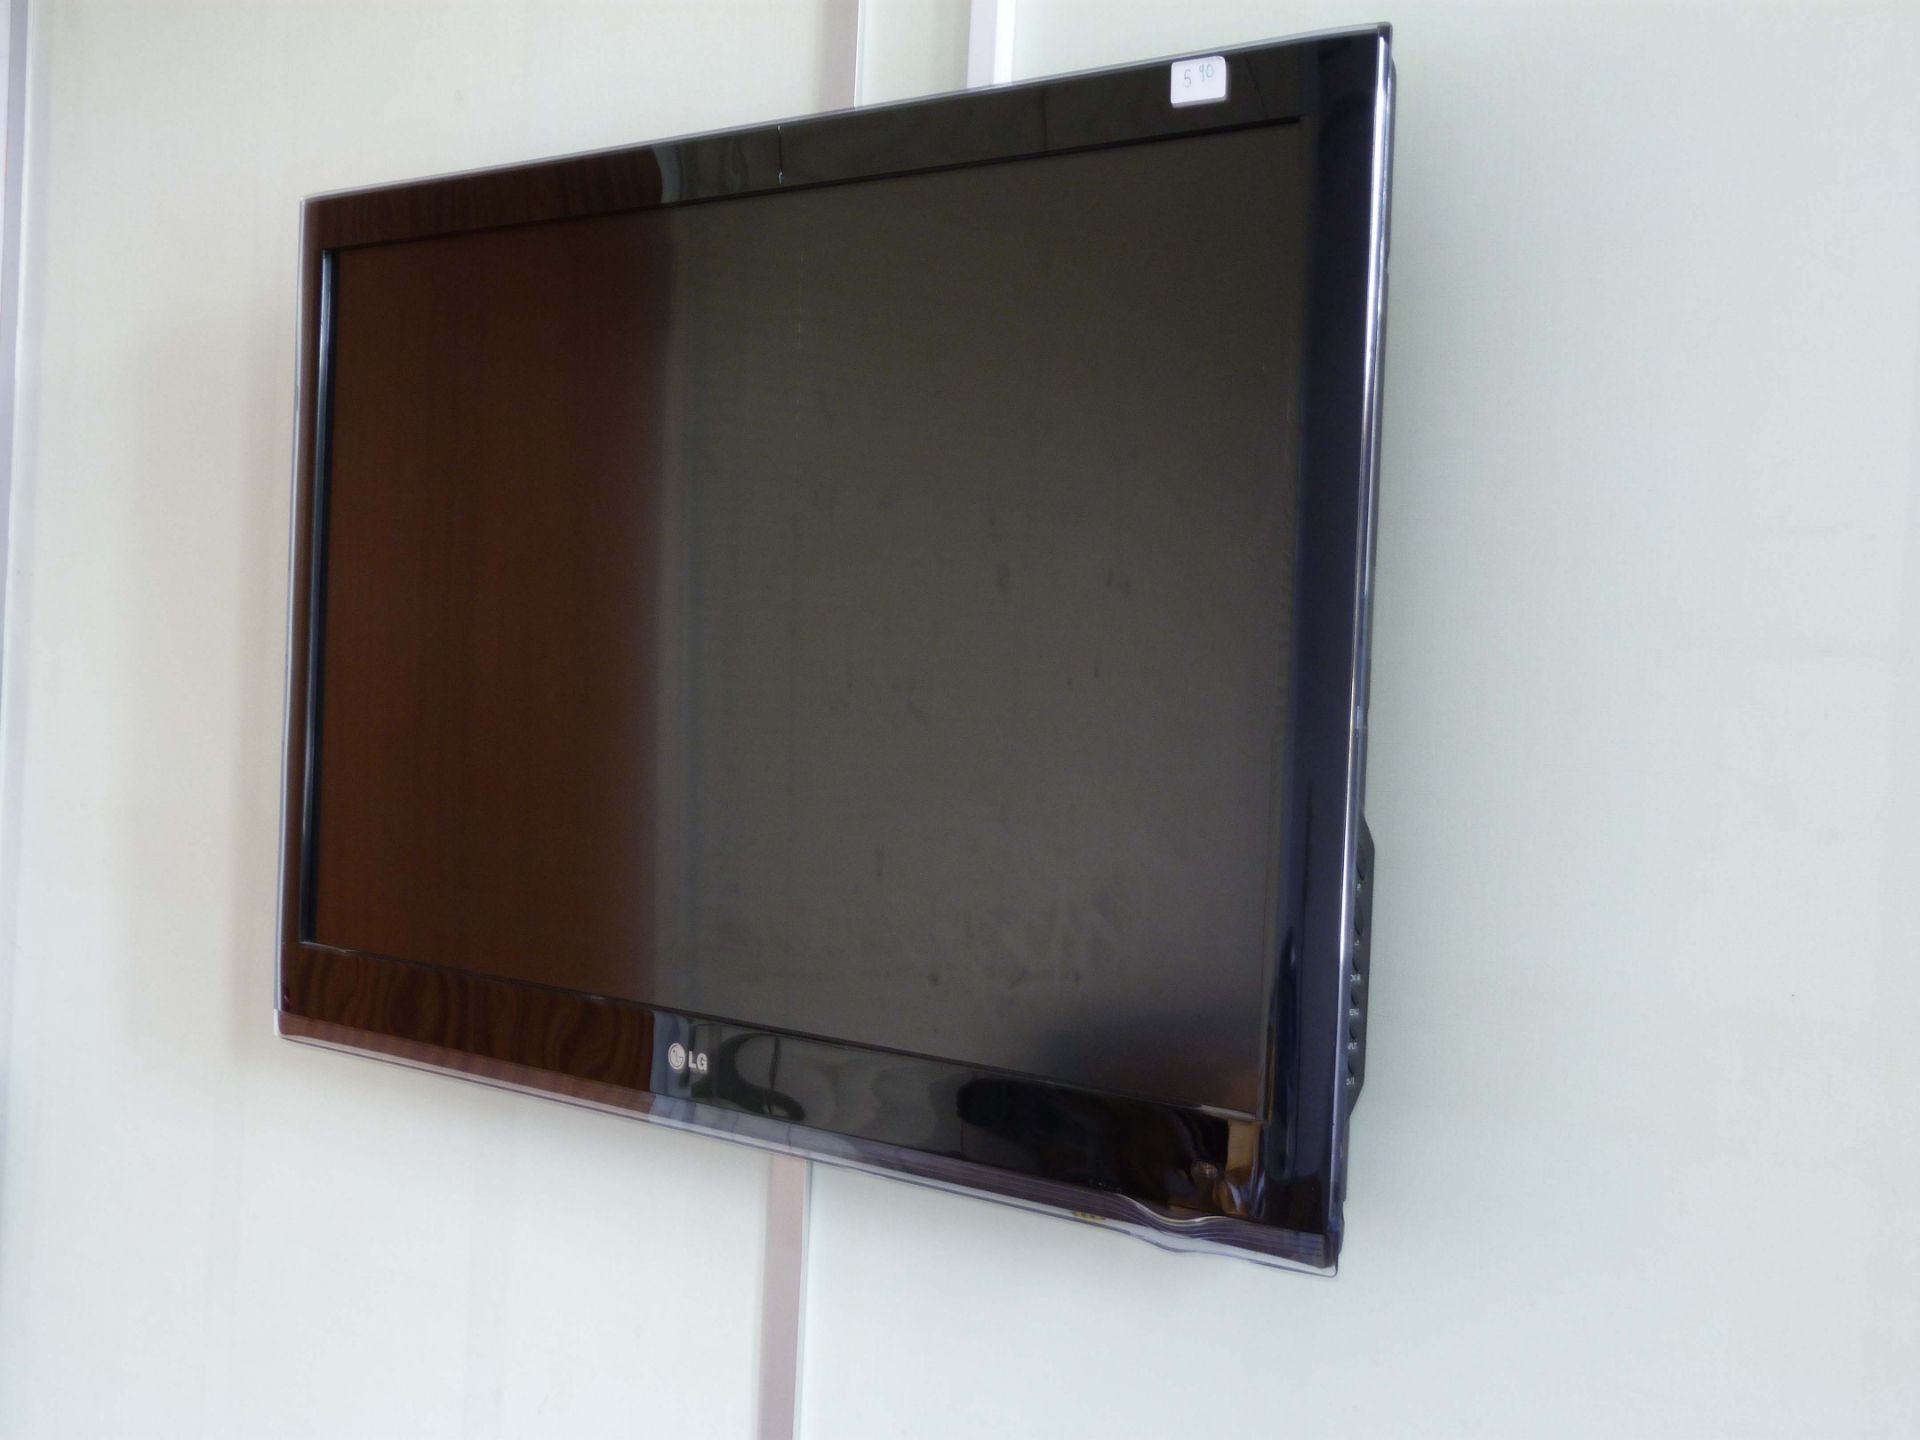 LG 42 inch flatscreen TV with remote